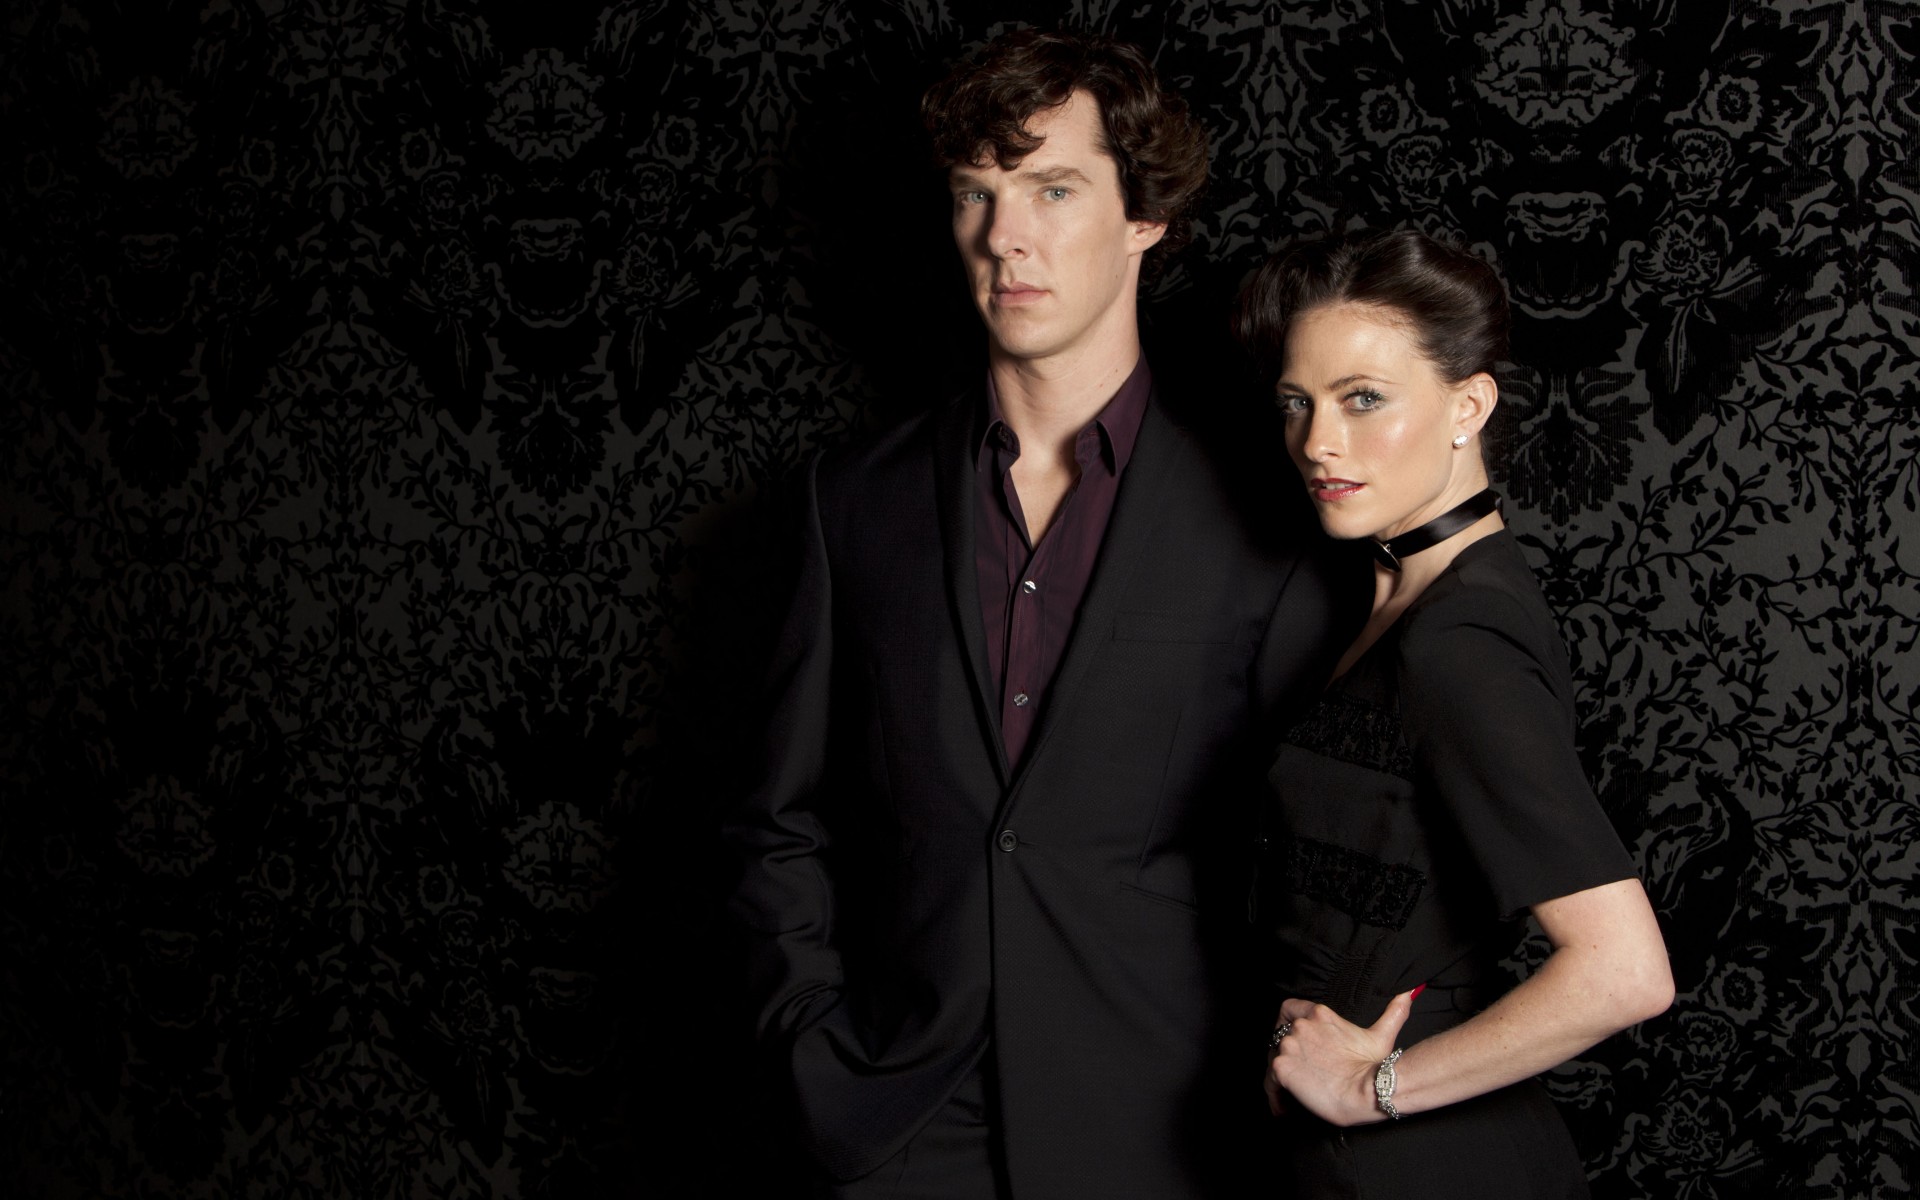 TV Show Sherlock HD Wallpaper | Background Image